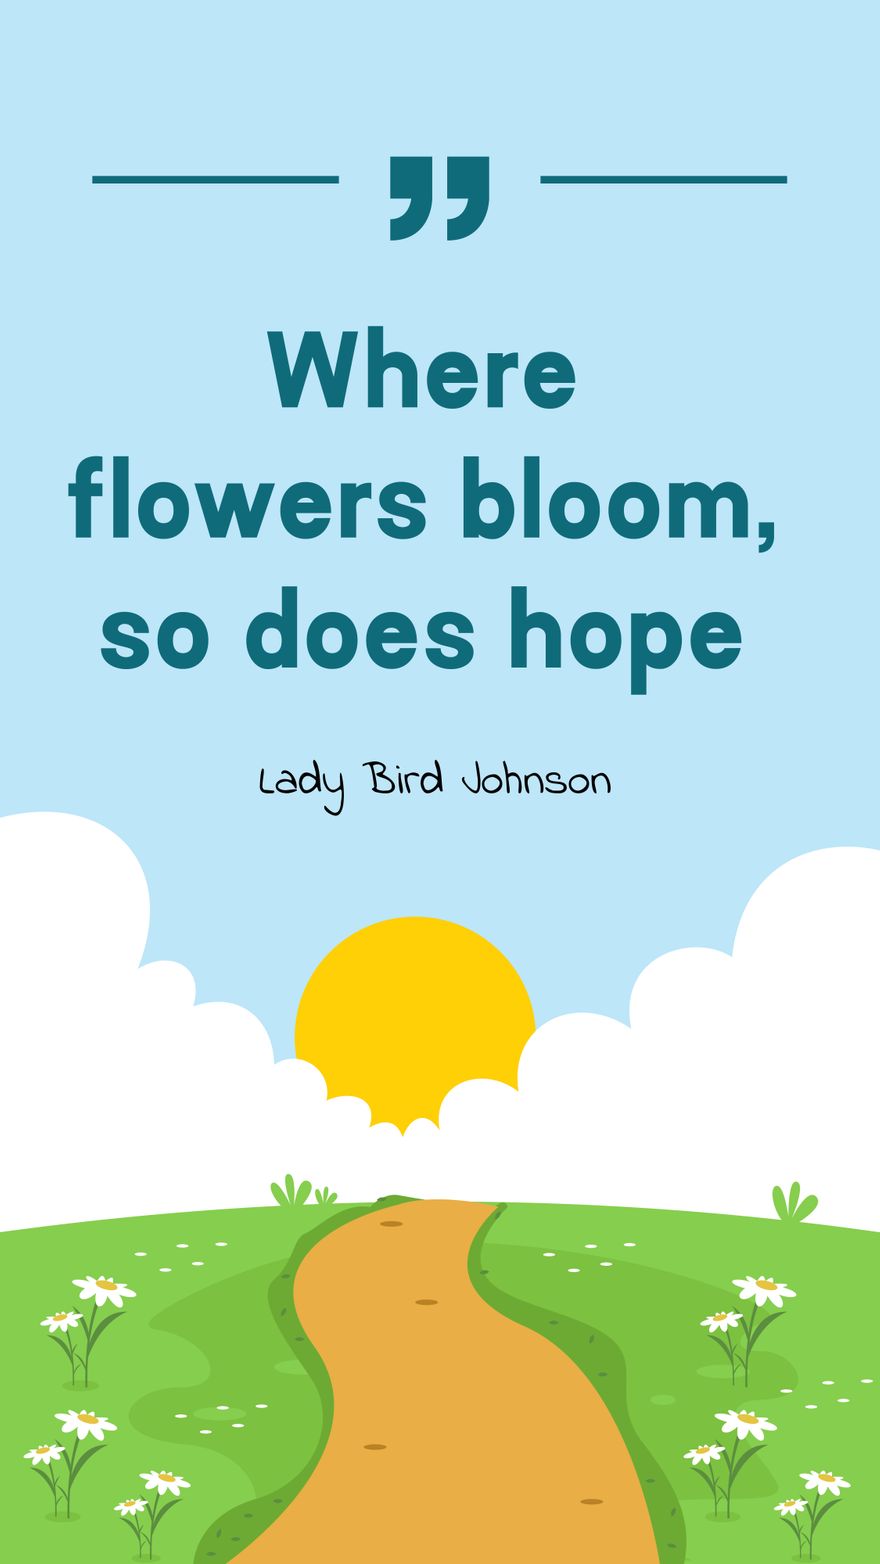 Lady Bird Johnson - Where flowers bloom, so does hope.